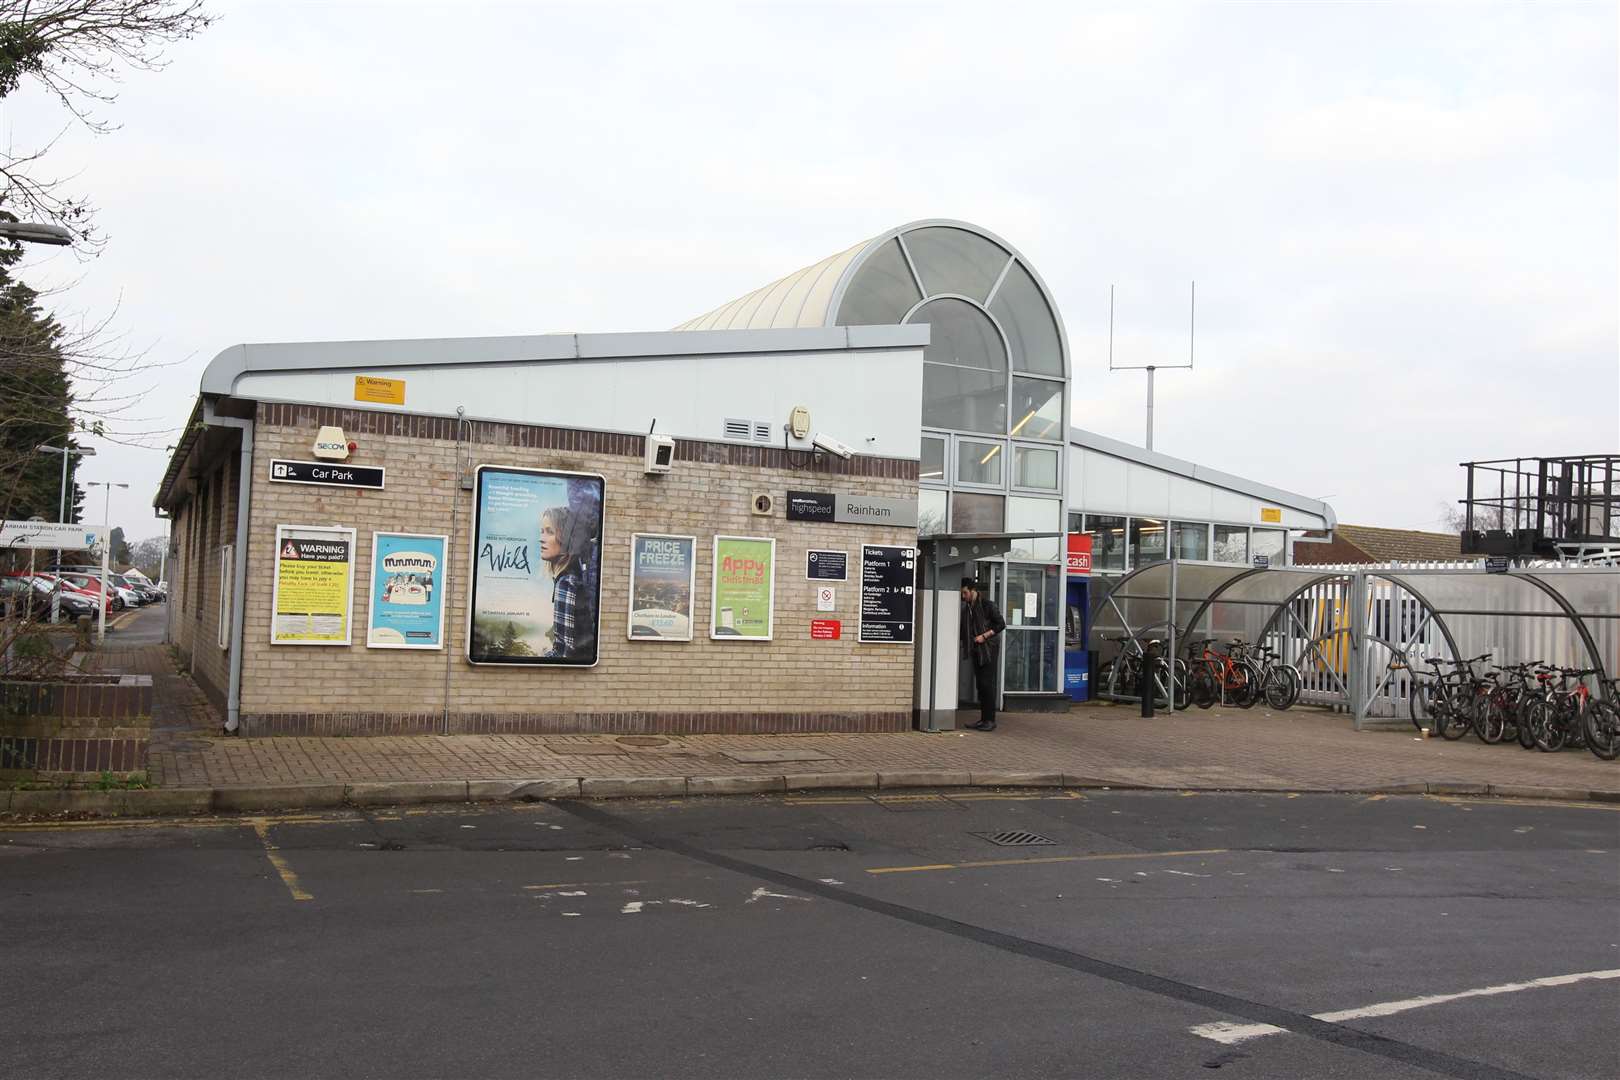 Some incidents took place near Rainham Railway Station